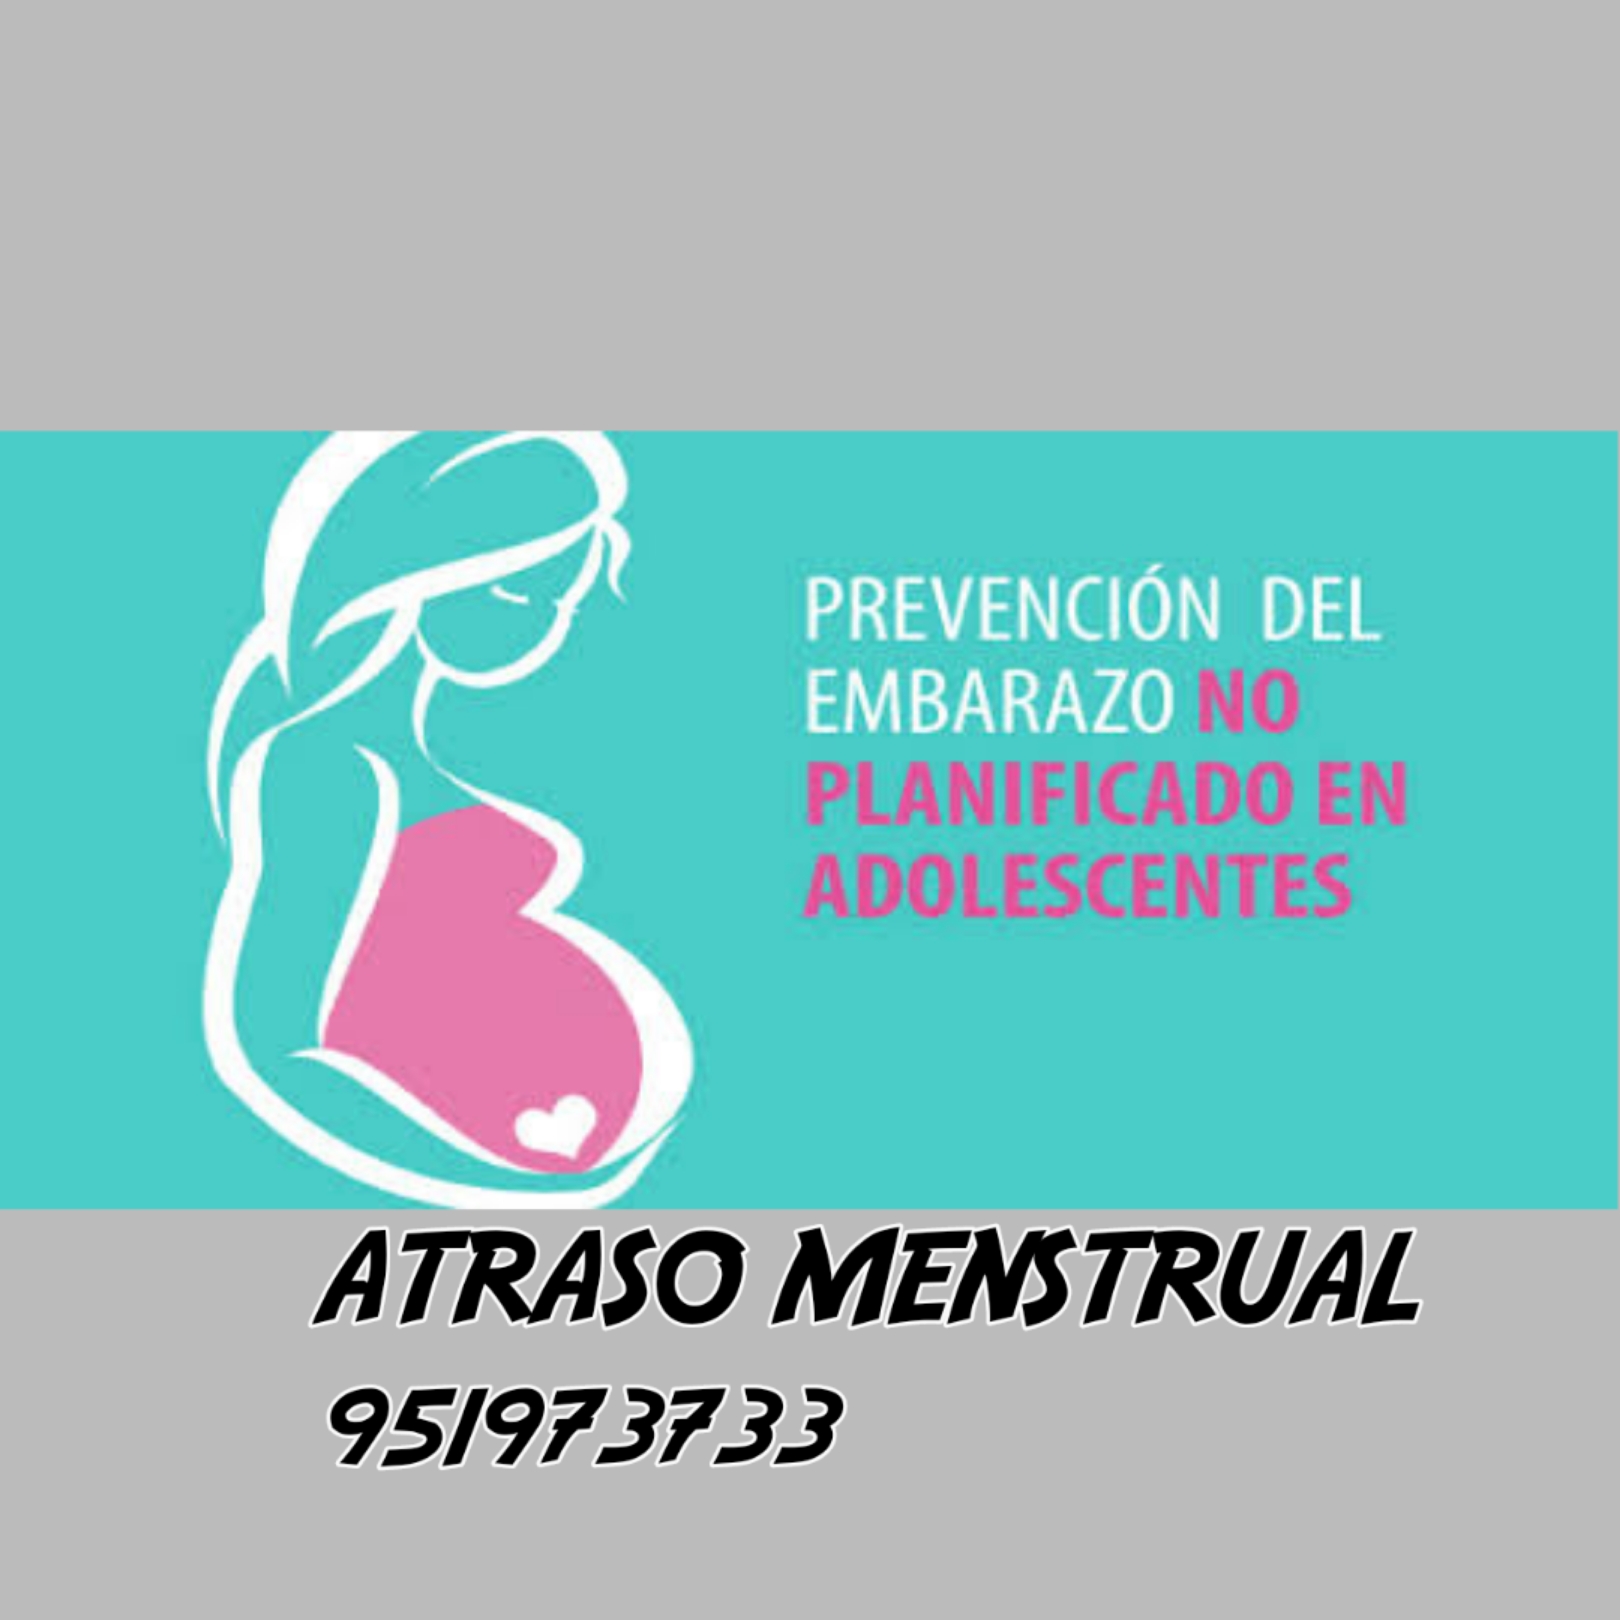 Atraso Menstrual 951973723 HUANCAVELICA Aborto Seguro